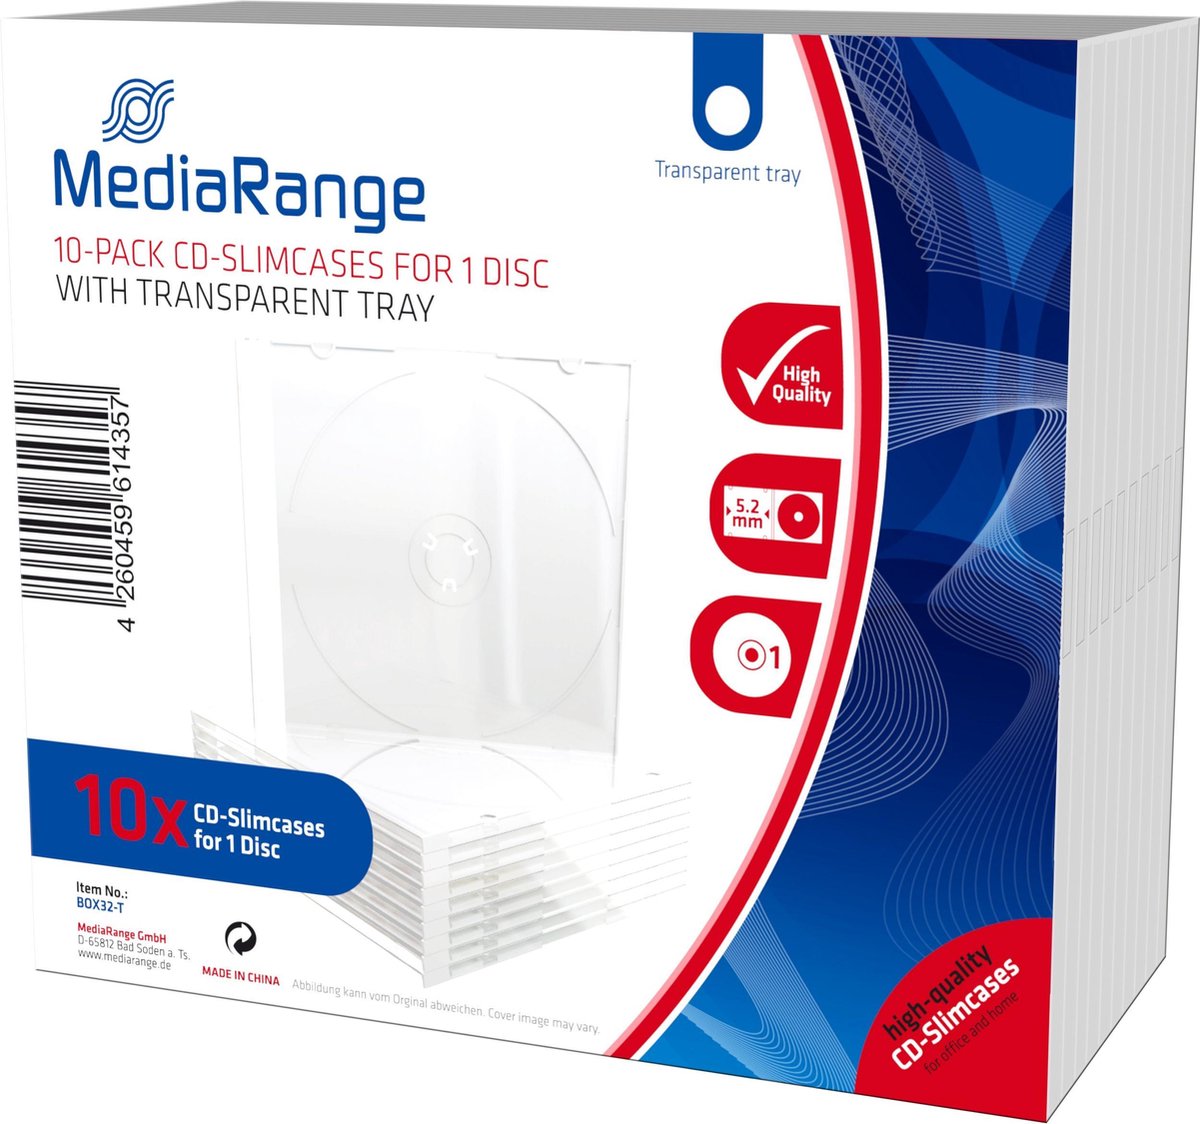 MediaRange CD-slimecase voor 1 Dics 5.2mm transparant 10 pack